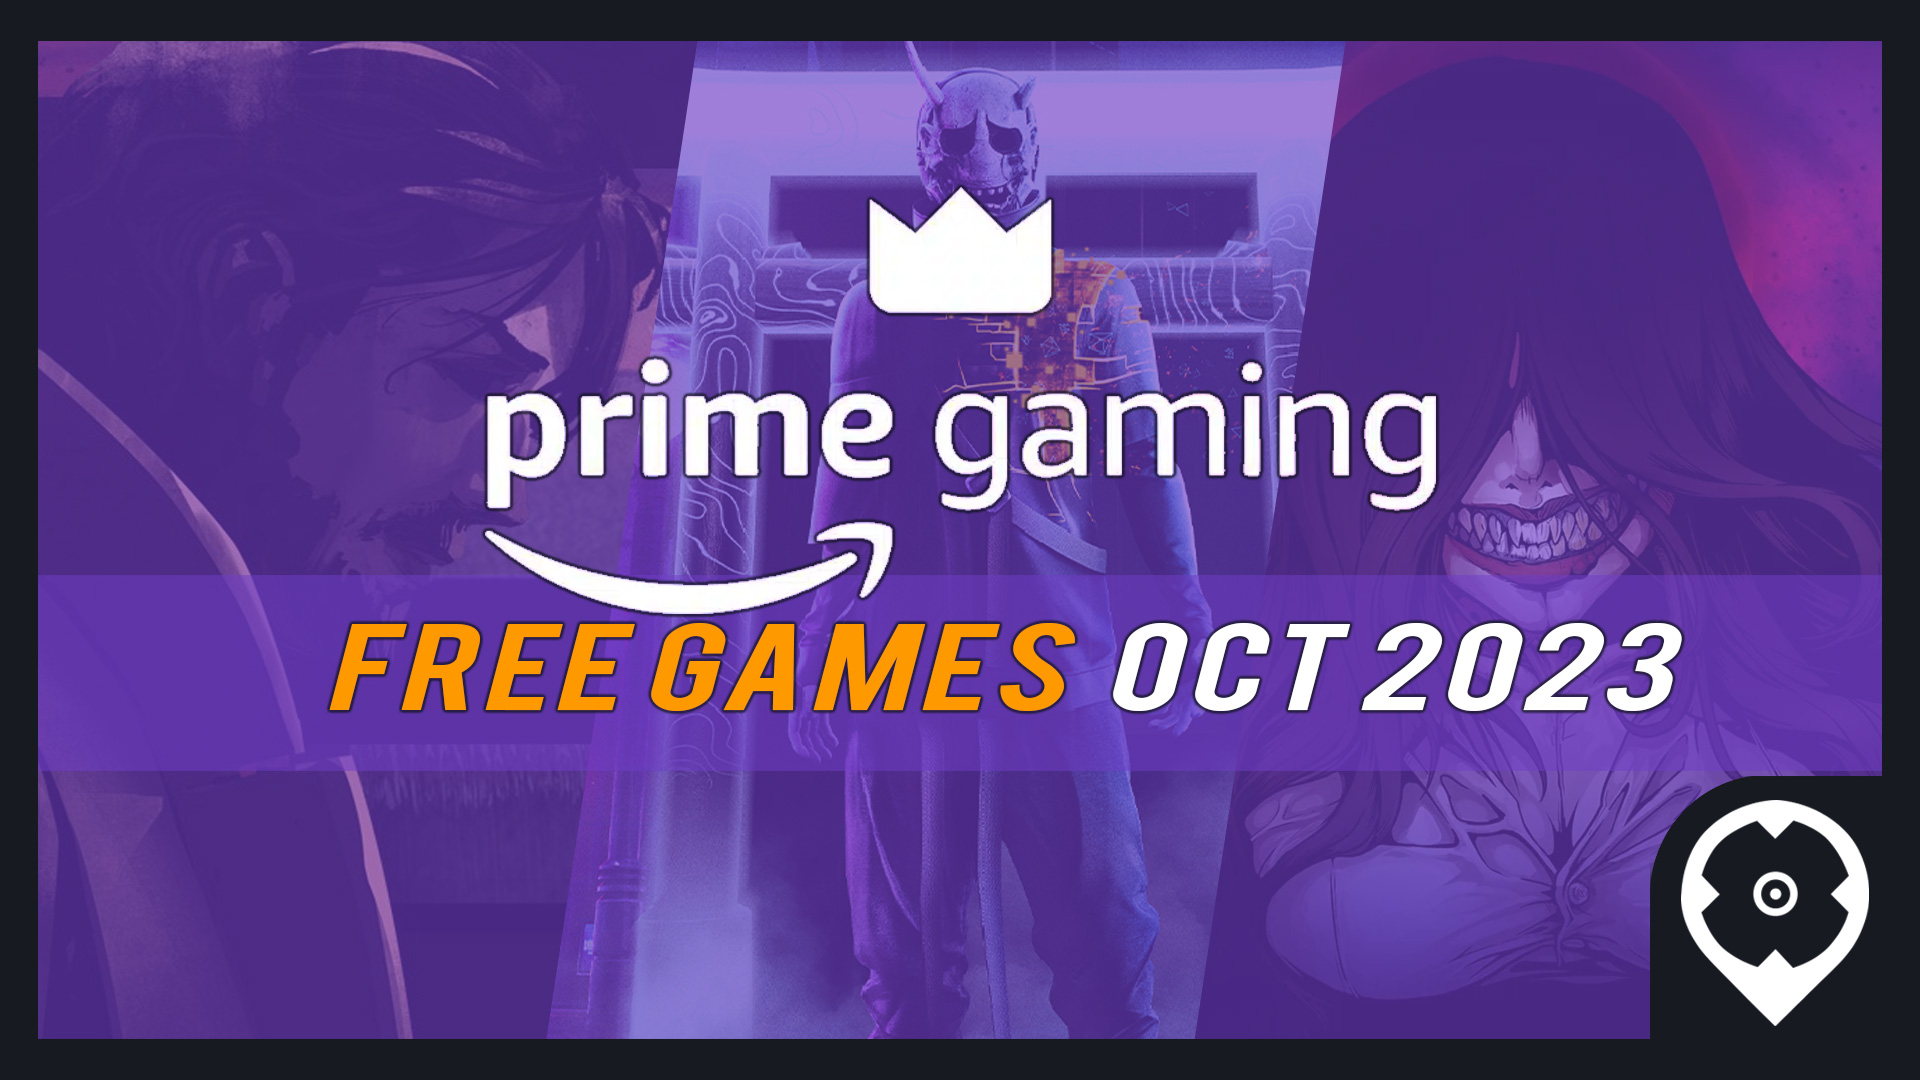 Prime Gaming Free Games for October 2023 - Full List